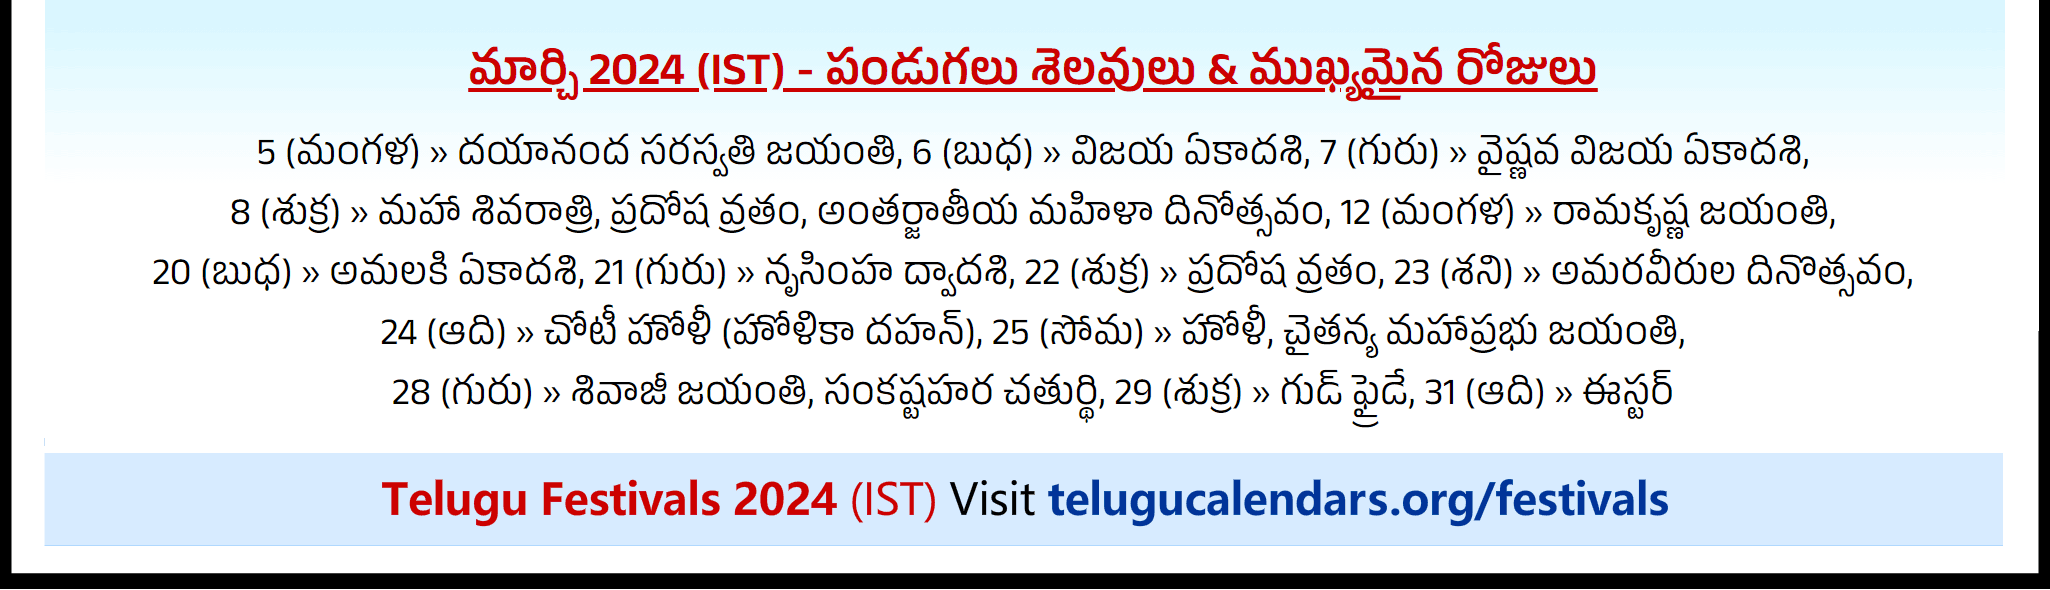 Telugu Festivals 2024 March Atlanta